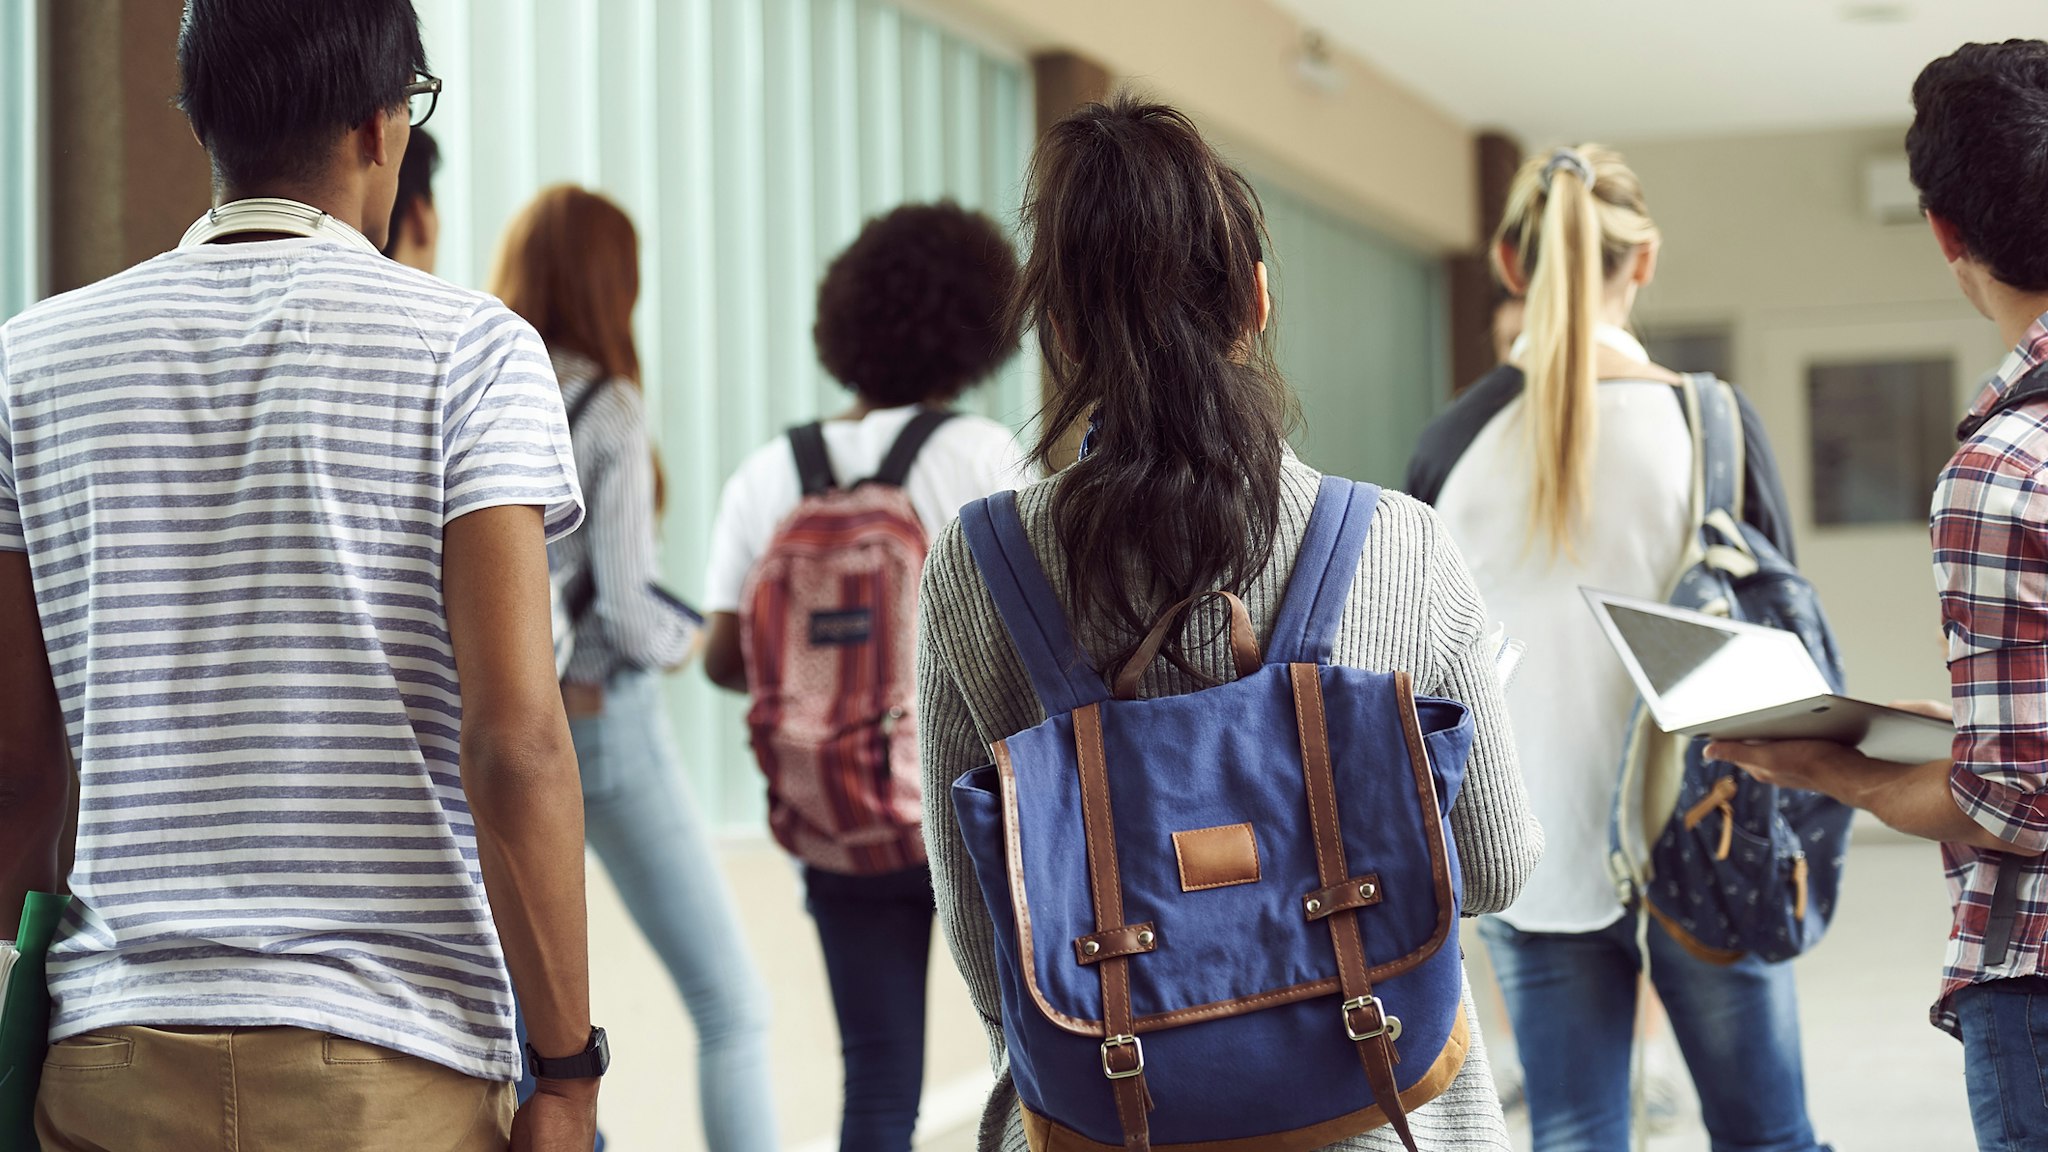 Students walking in school corridor, rear view